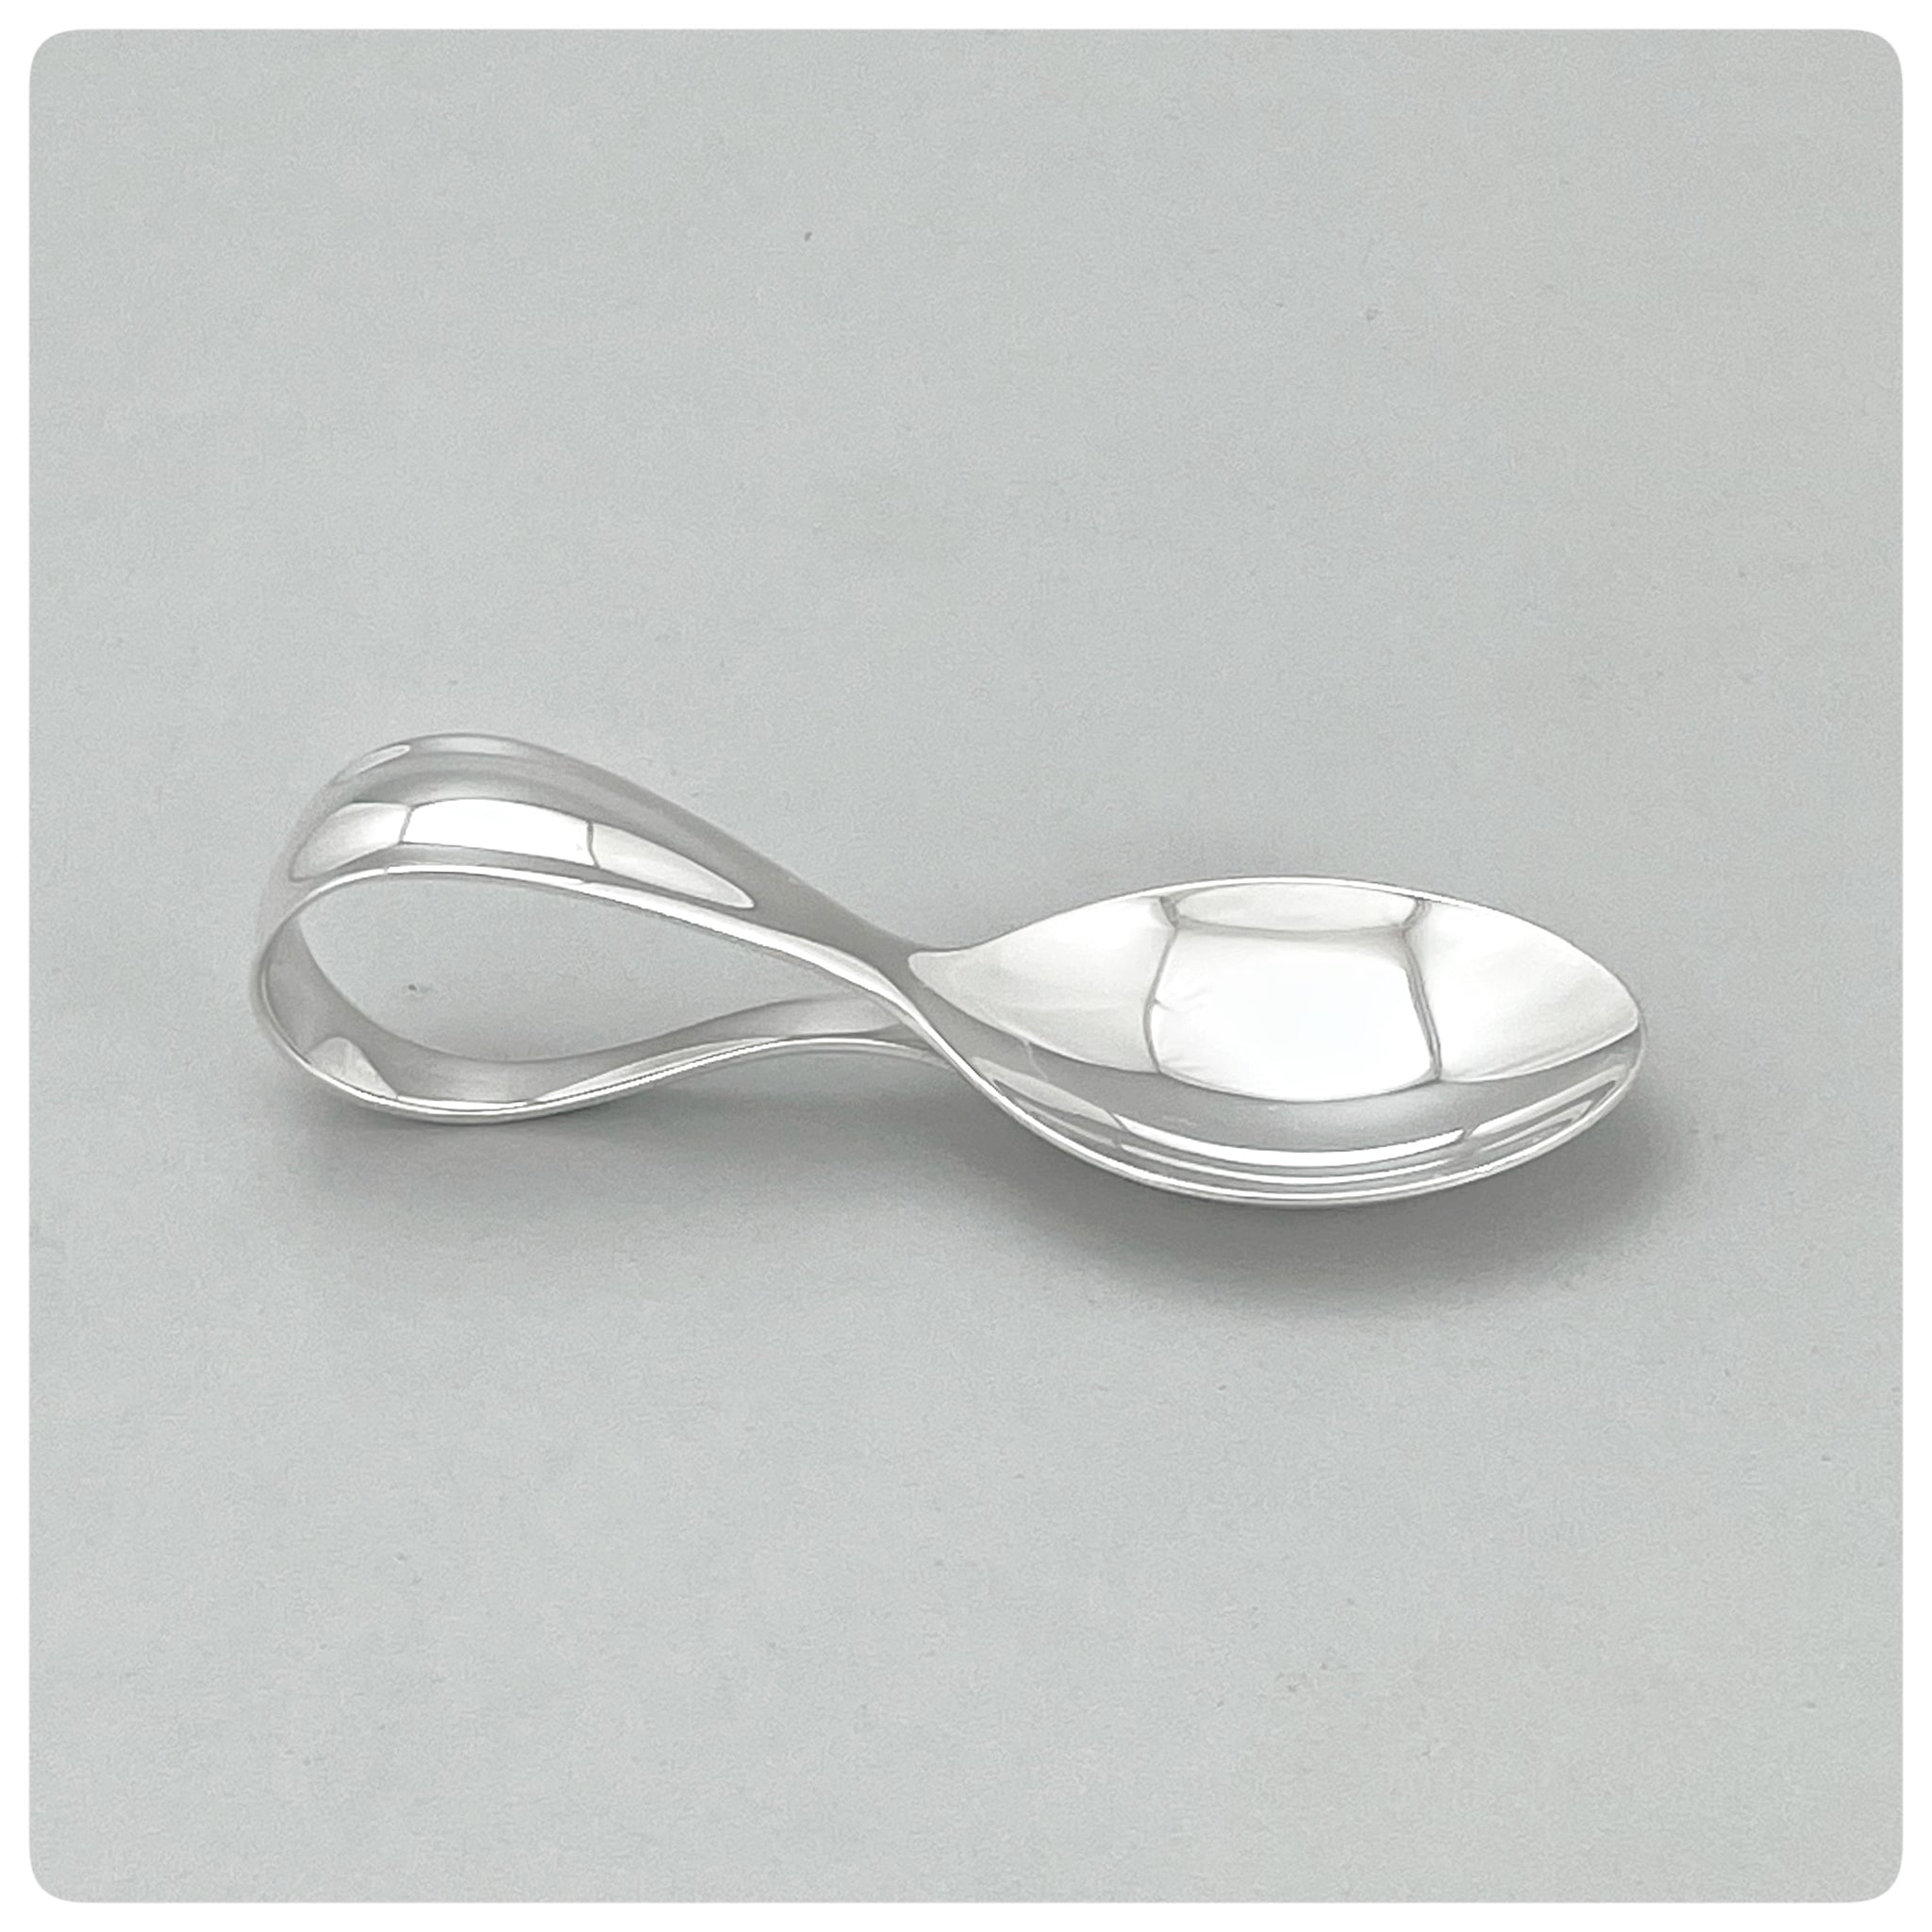 Virginia Baby Bent Spoon  Curved Handle Baby Feeding Spoon